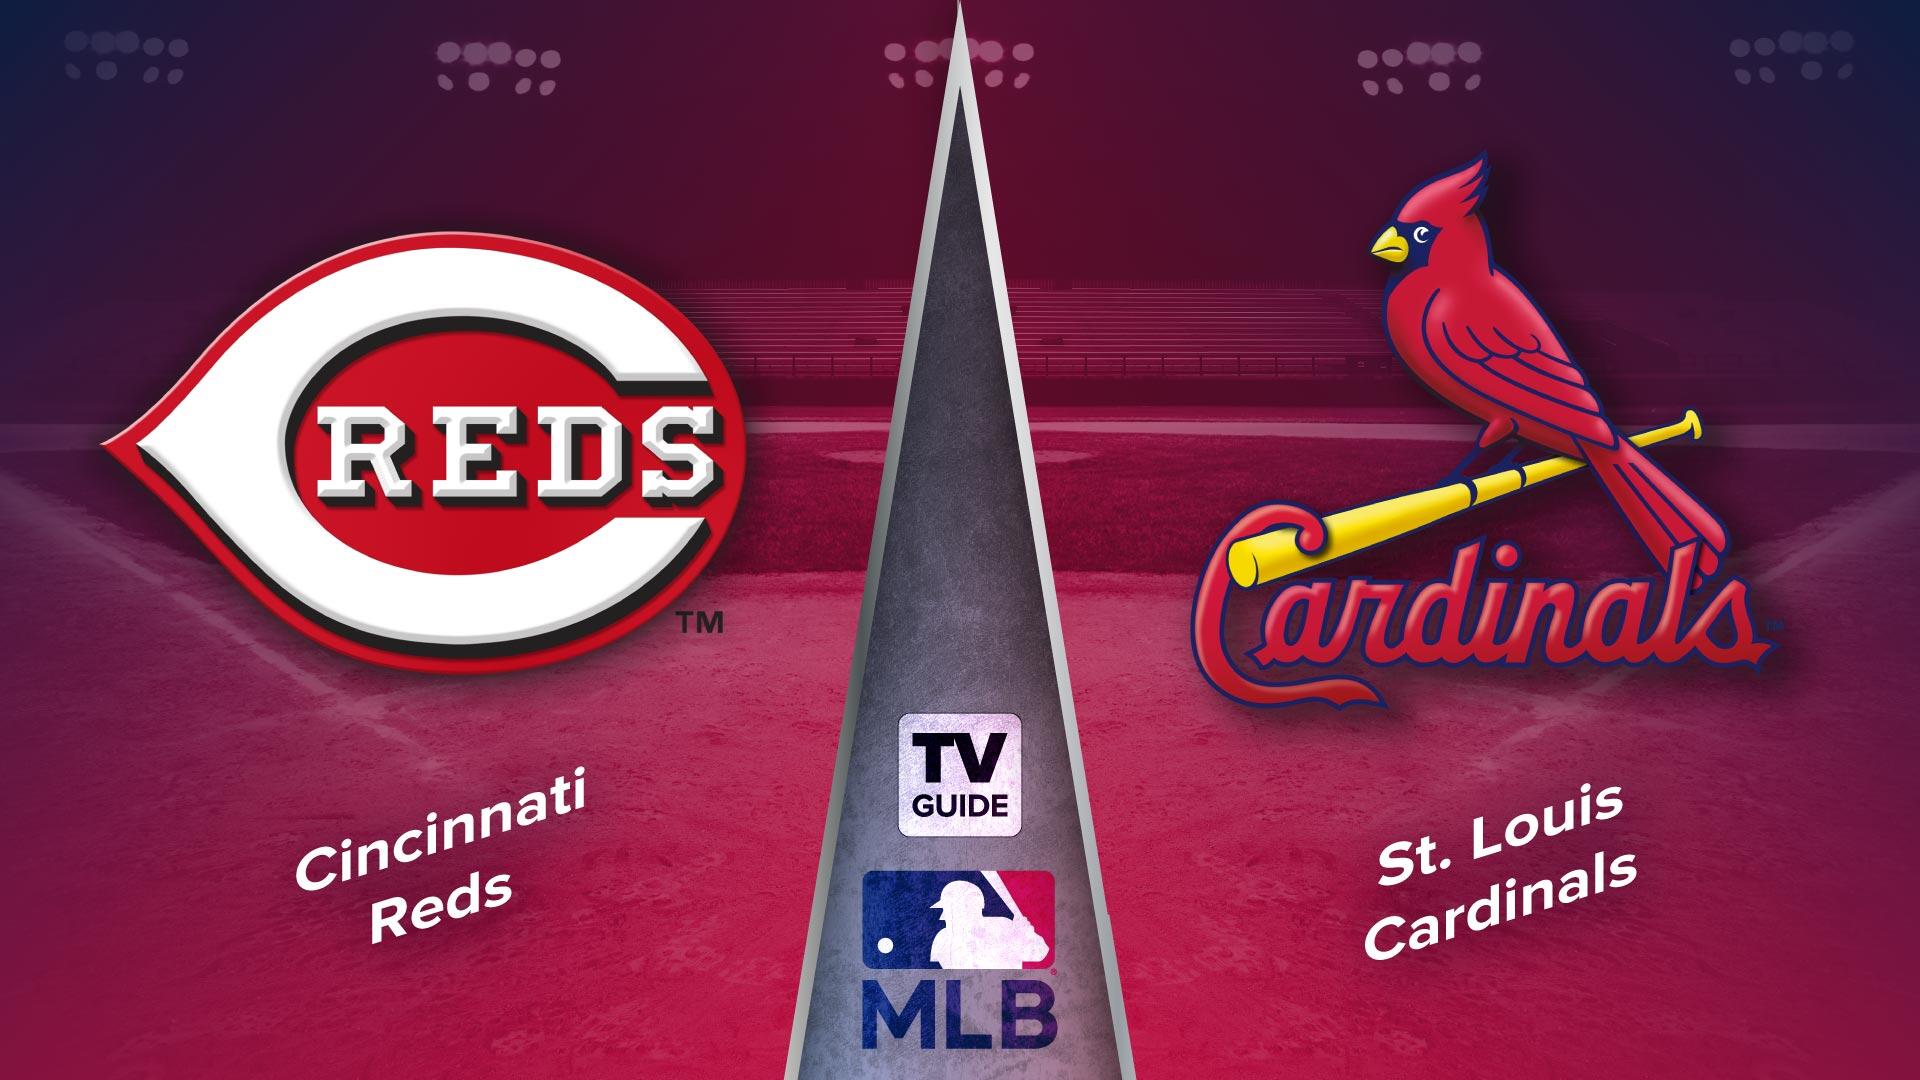 How to Watch Cincinnati Reds vs. St. Louis Cardinals Live on Oct 1